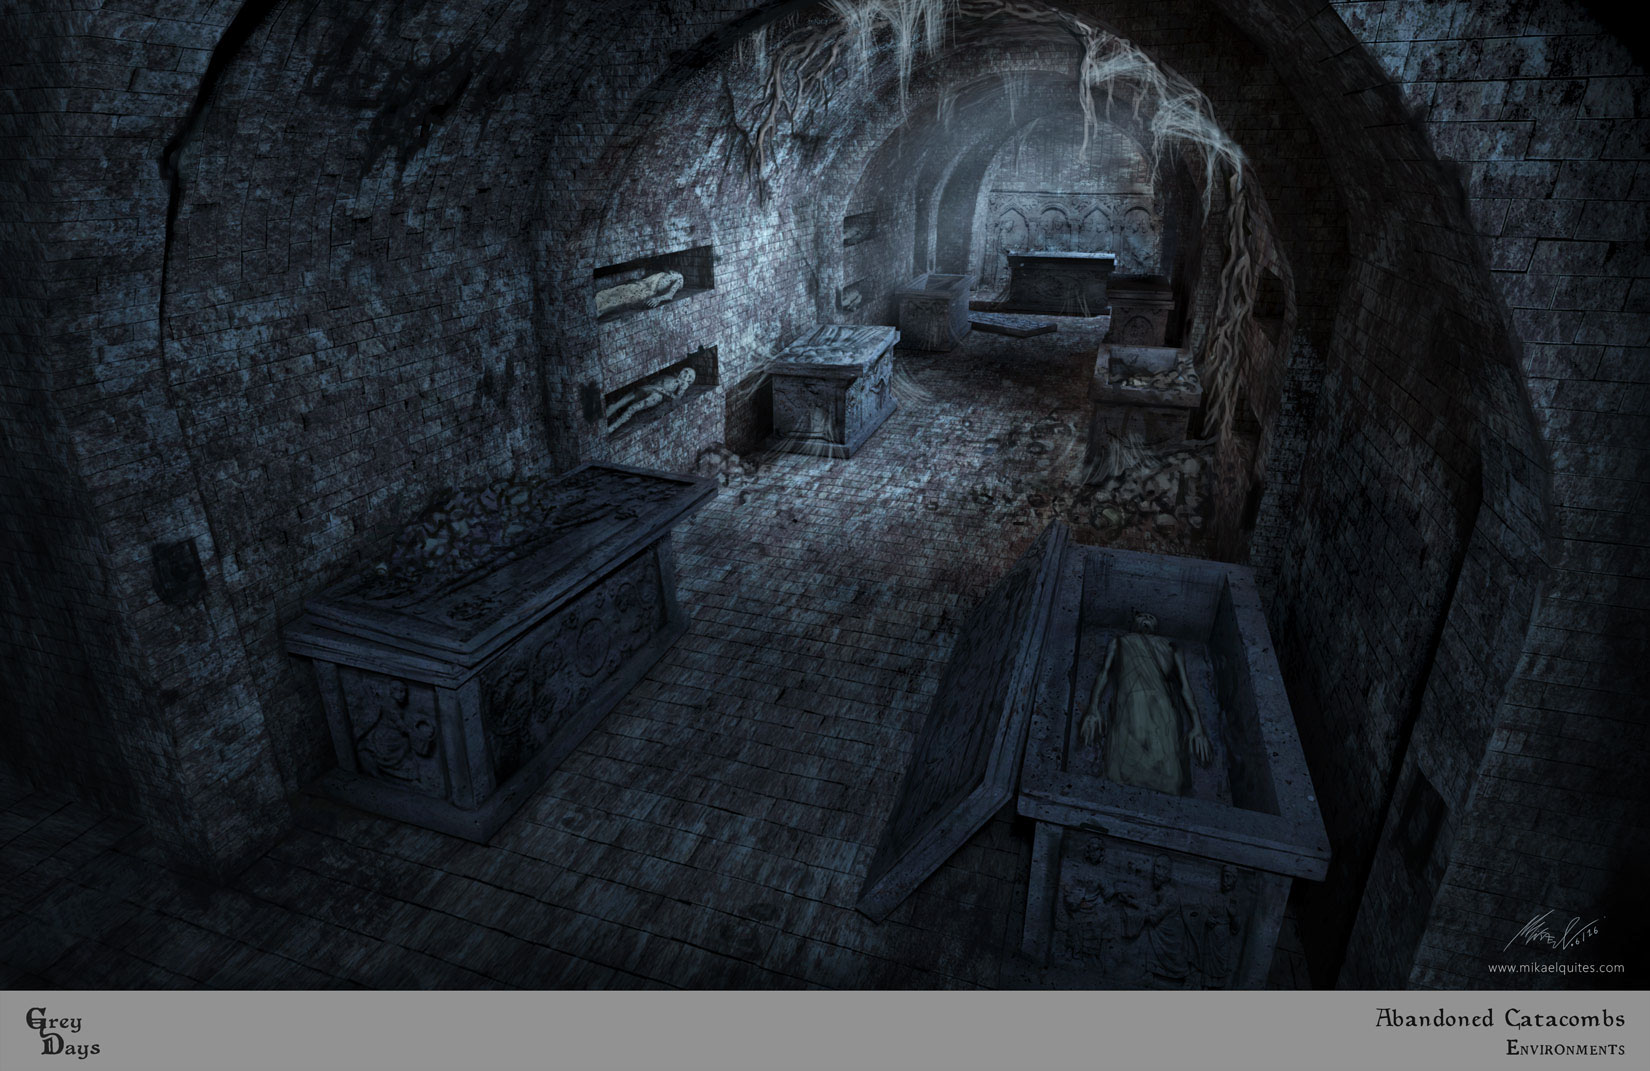 Grey Days - Abandoned Catacombs on Behance